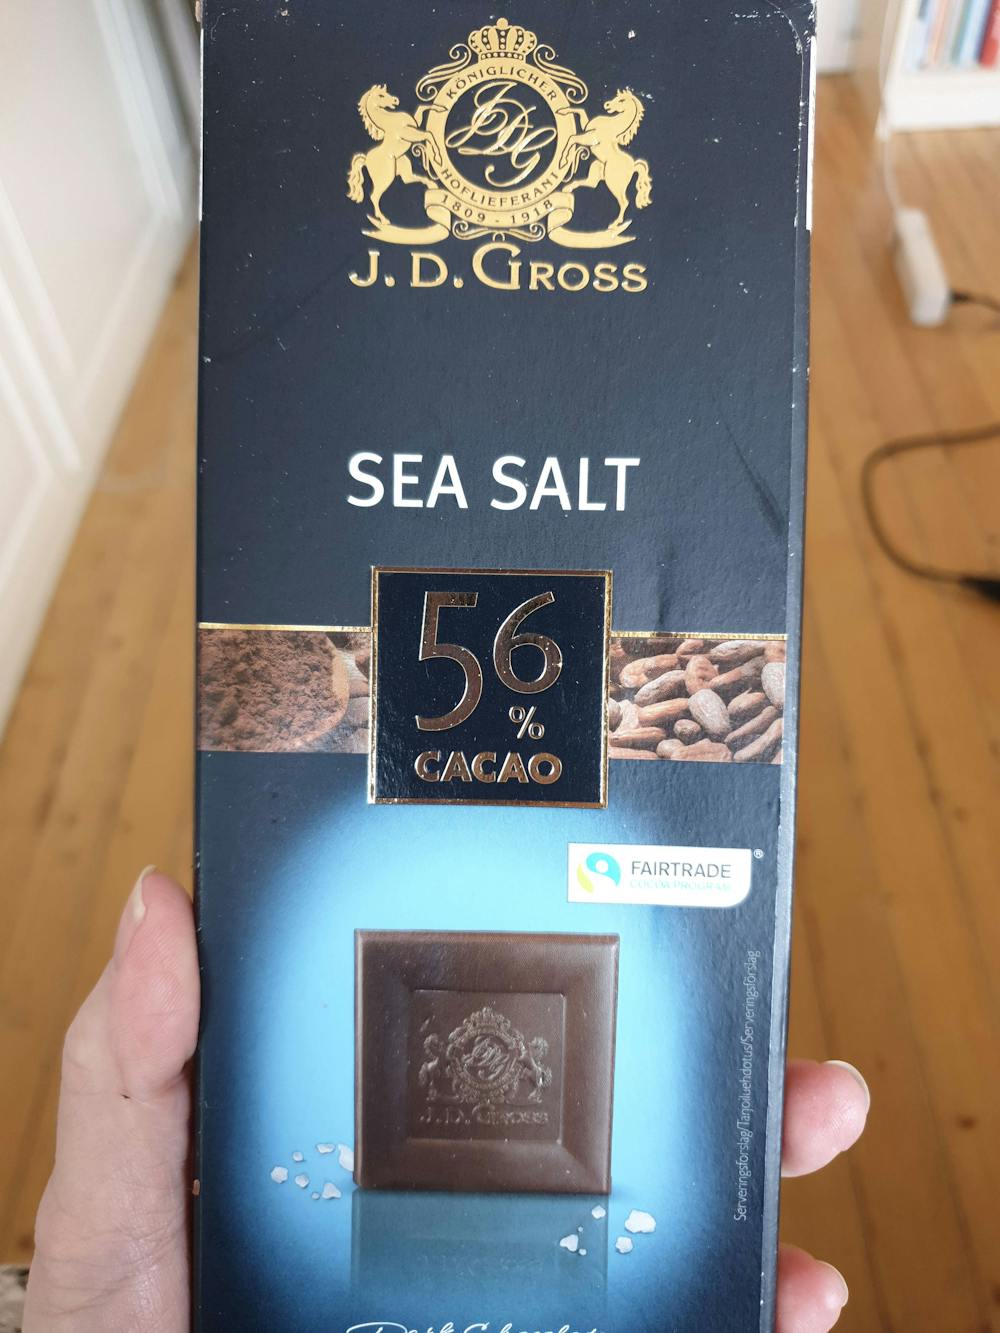 Sea salt 56% cacao, J. D. Gross